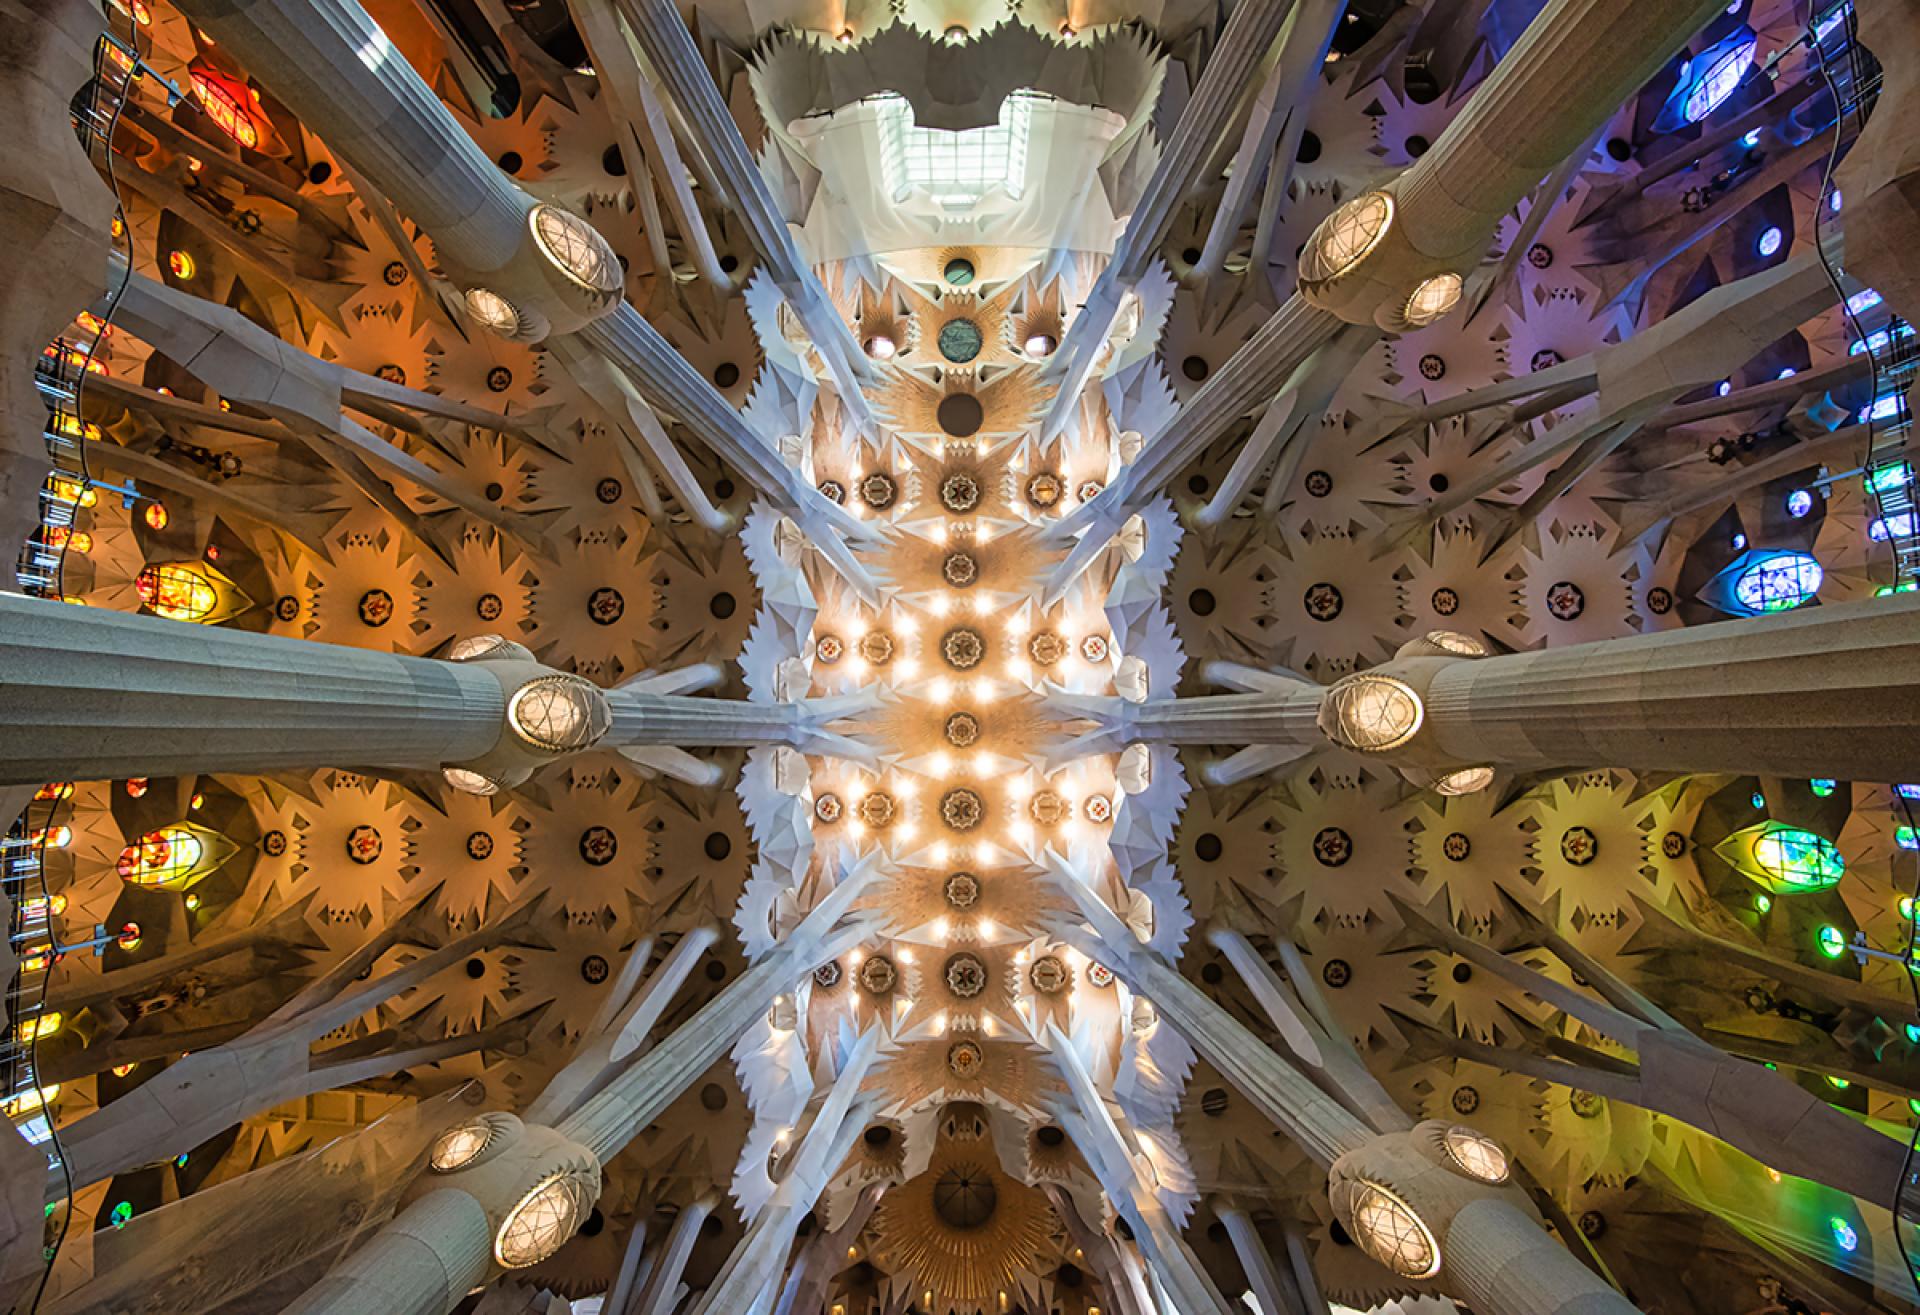 London Photography Awards Winner - Ceiling, Sagrada Familia